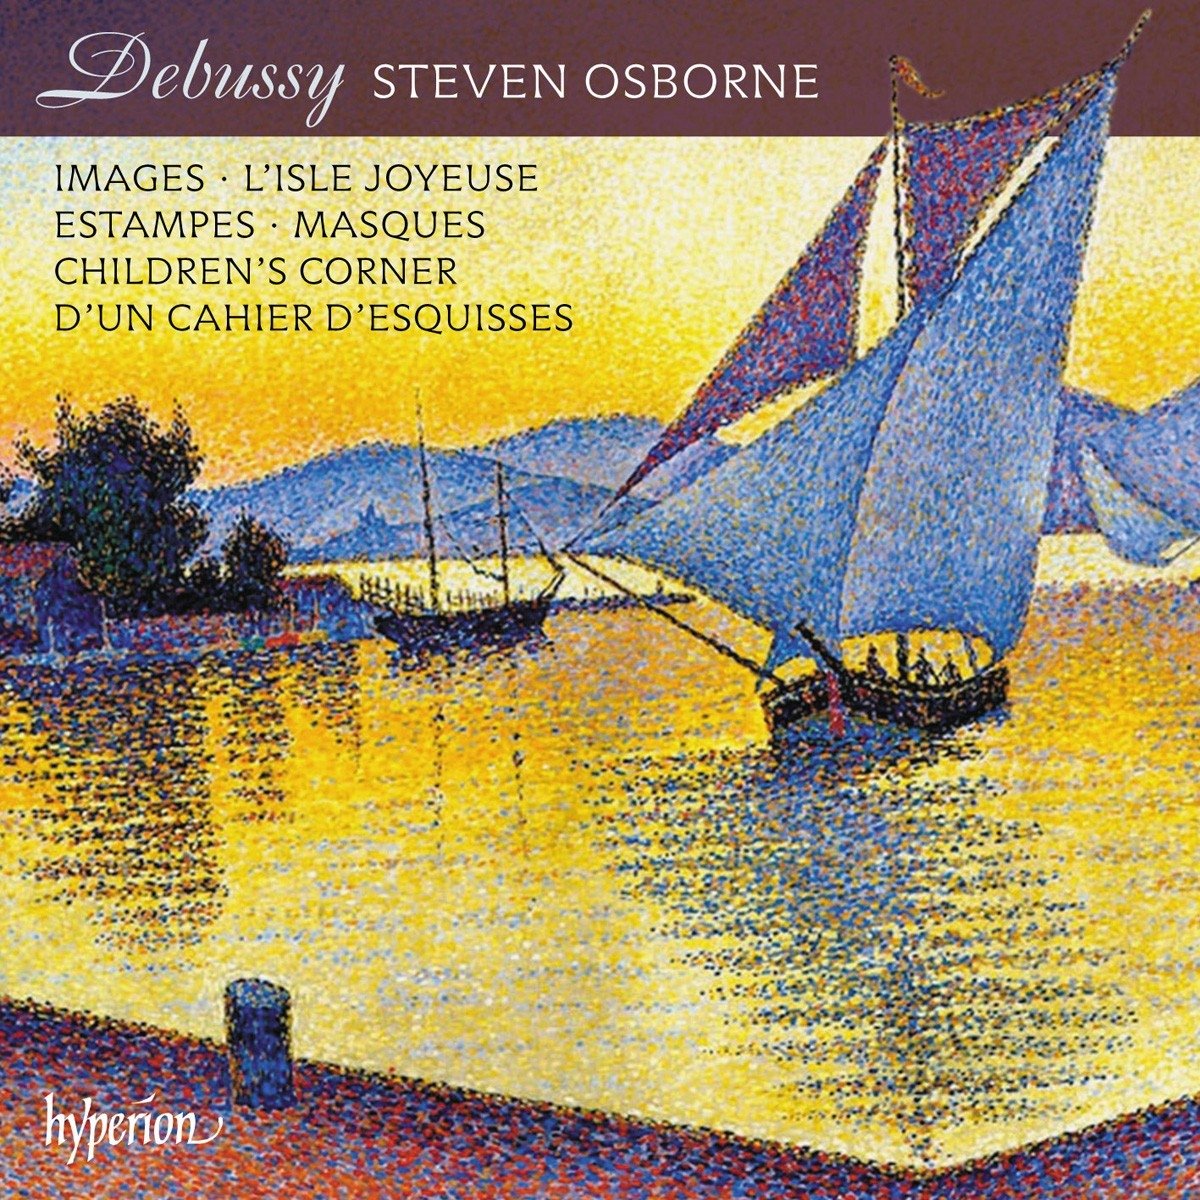 Steven Osborne – Debussy: Piano Music (2017) [Official Digital Download 24bit/96kHz]